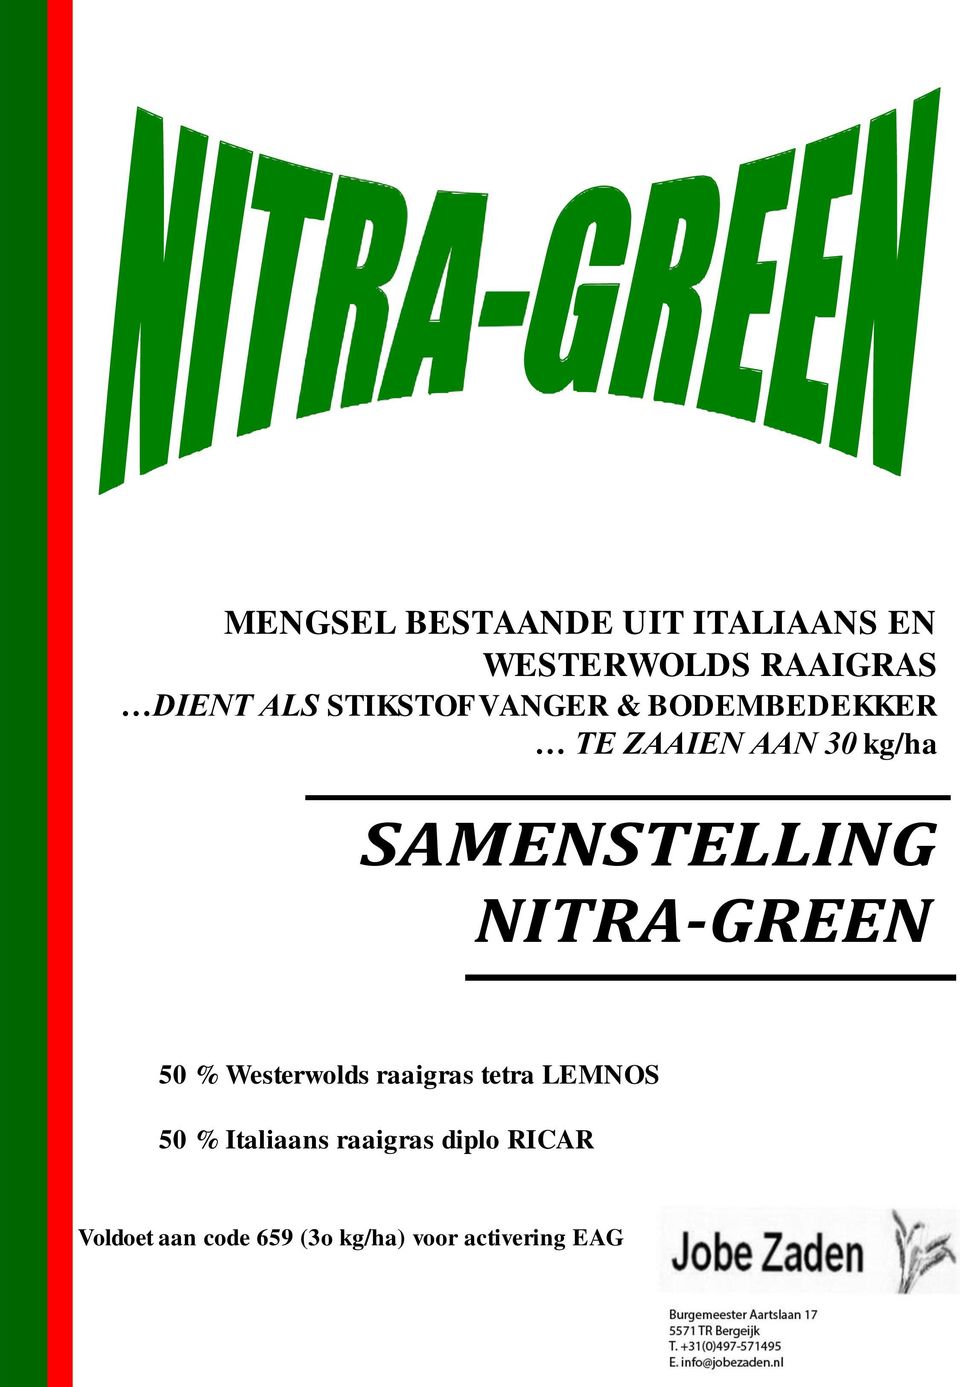 NITRA-GREEN 50 % Westerwolds raaigras tetra LEMNOS 50 % Italiaans